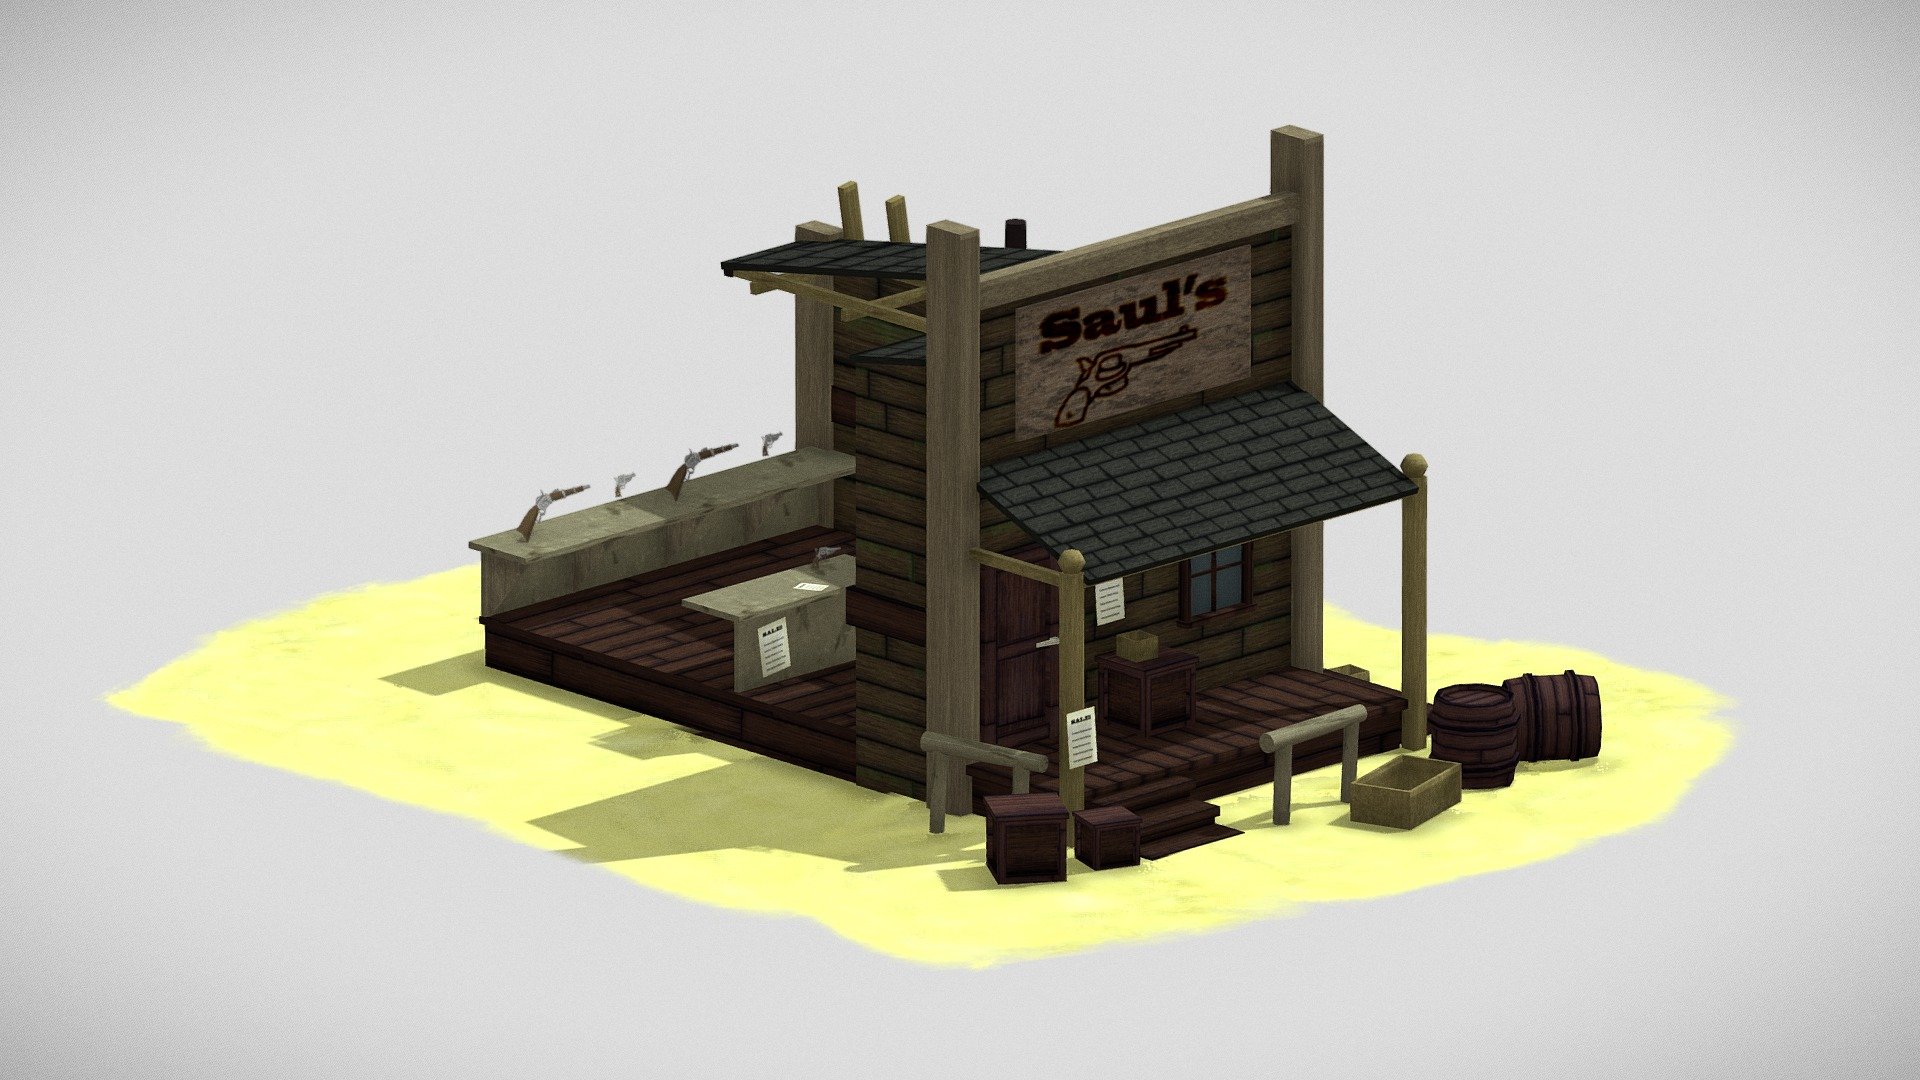 Wild West Gun shop created in Maya - Saul's Flat Shooters - 3D model by Marphic 3d model